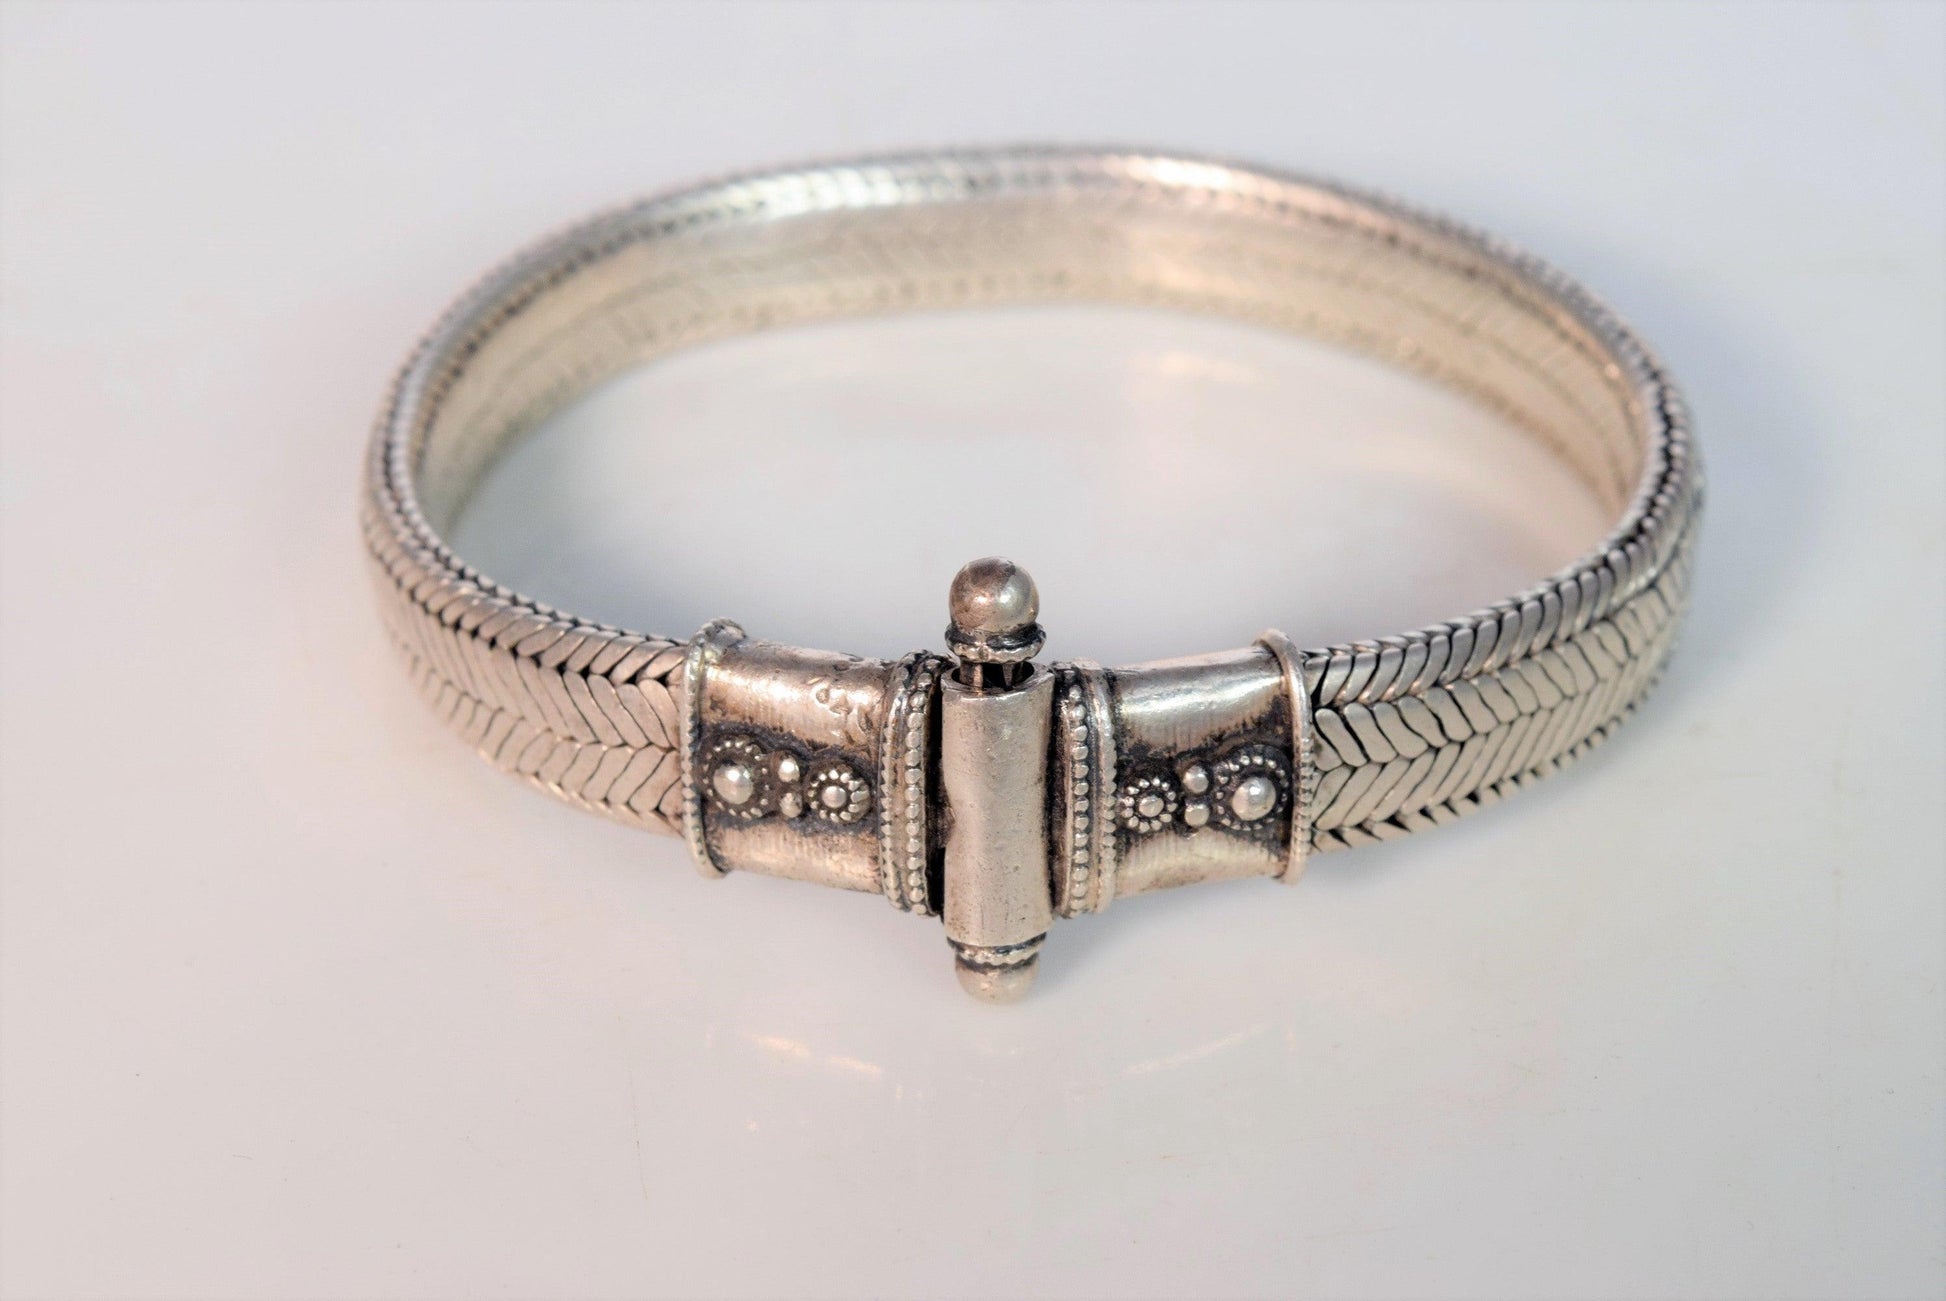 Indian silver bracelet